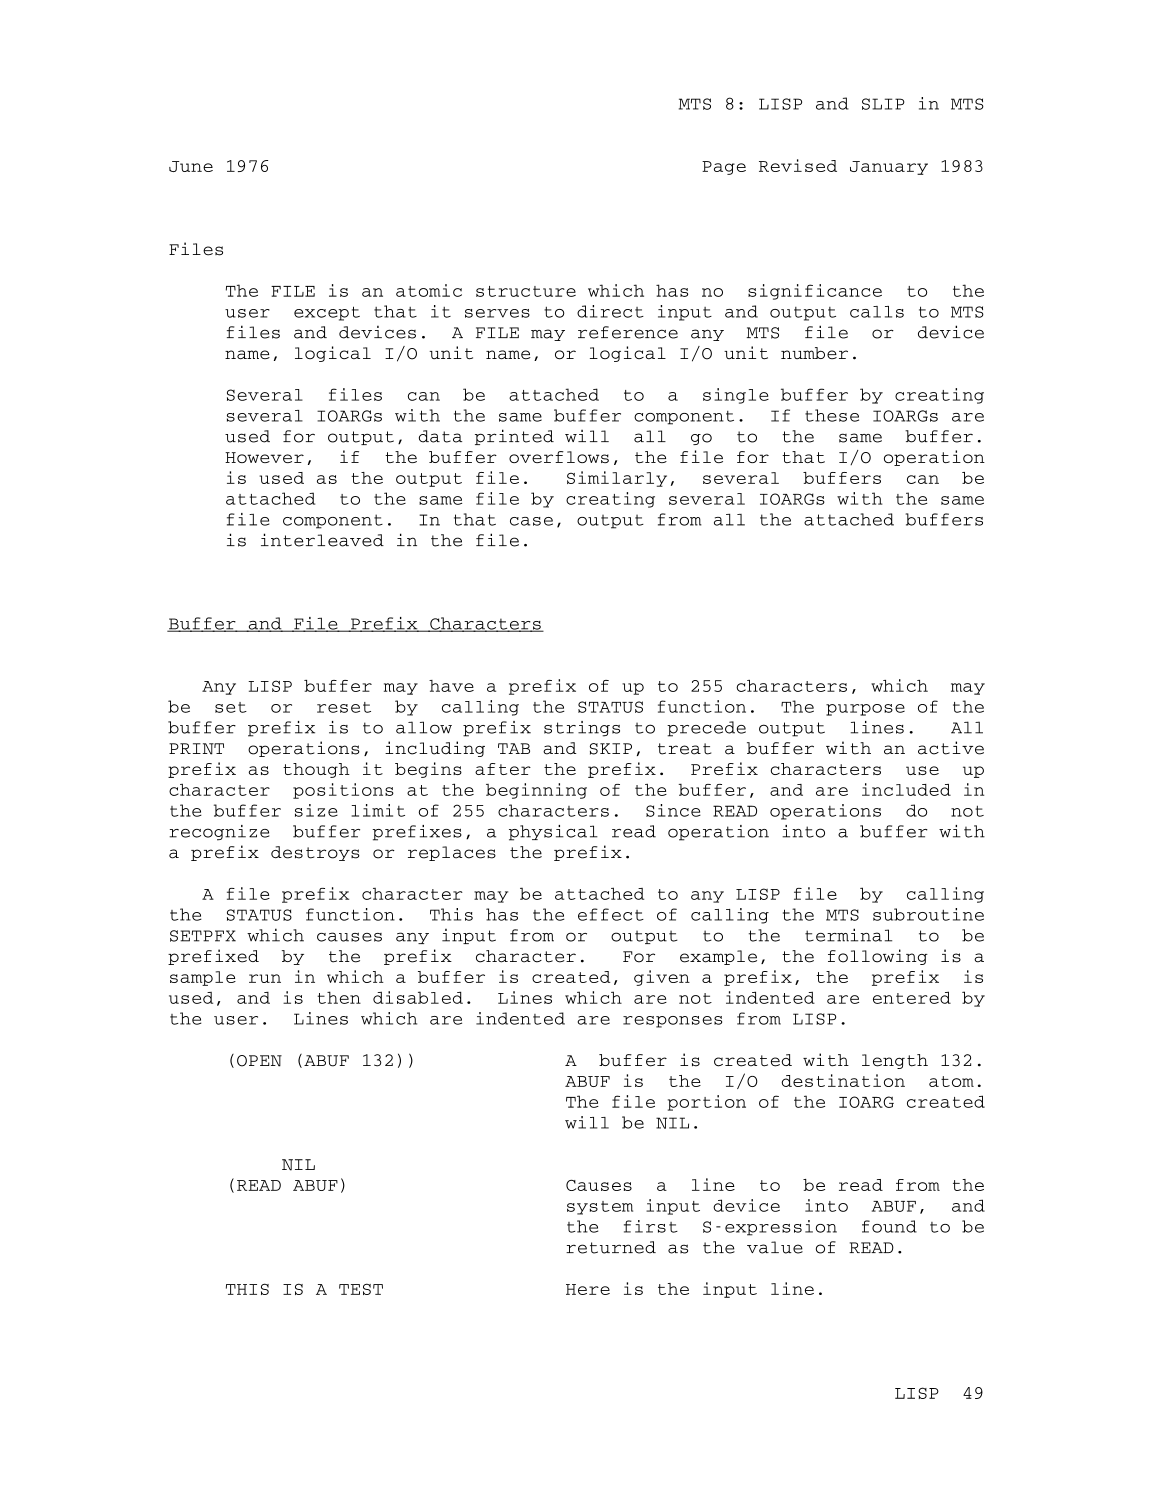 MTS Volume 8 - LISP and SLIP page 48